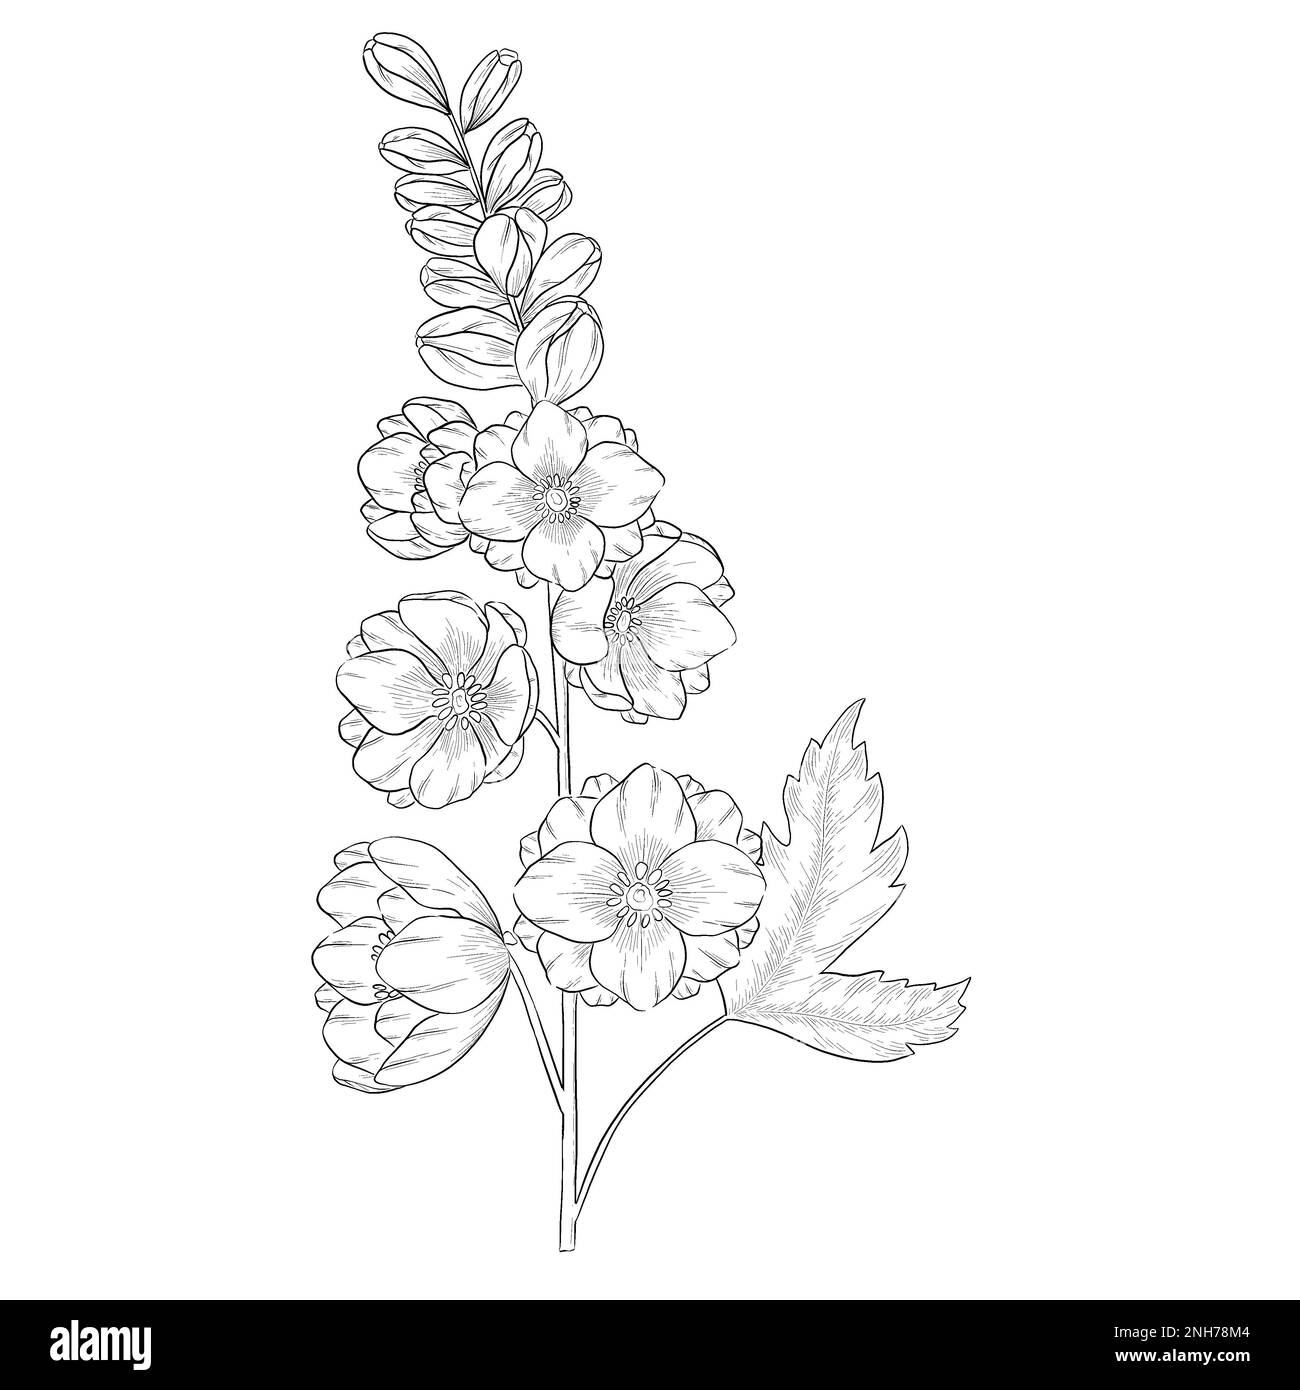 Delphinium outline botanical illustration. Line art digitally drawn illustrations. Stock Photo